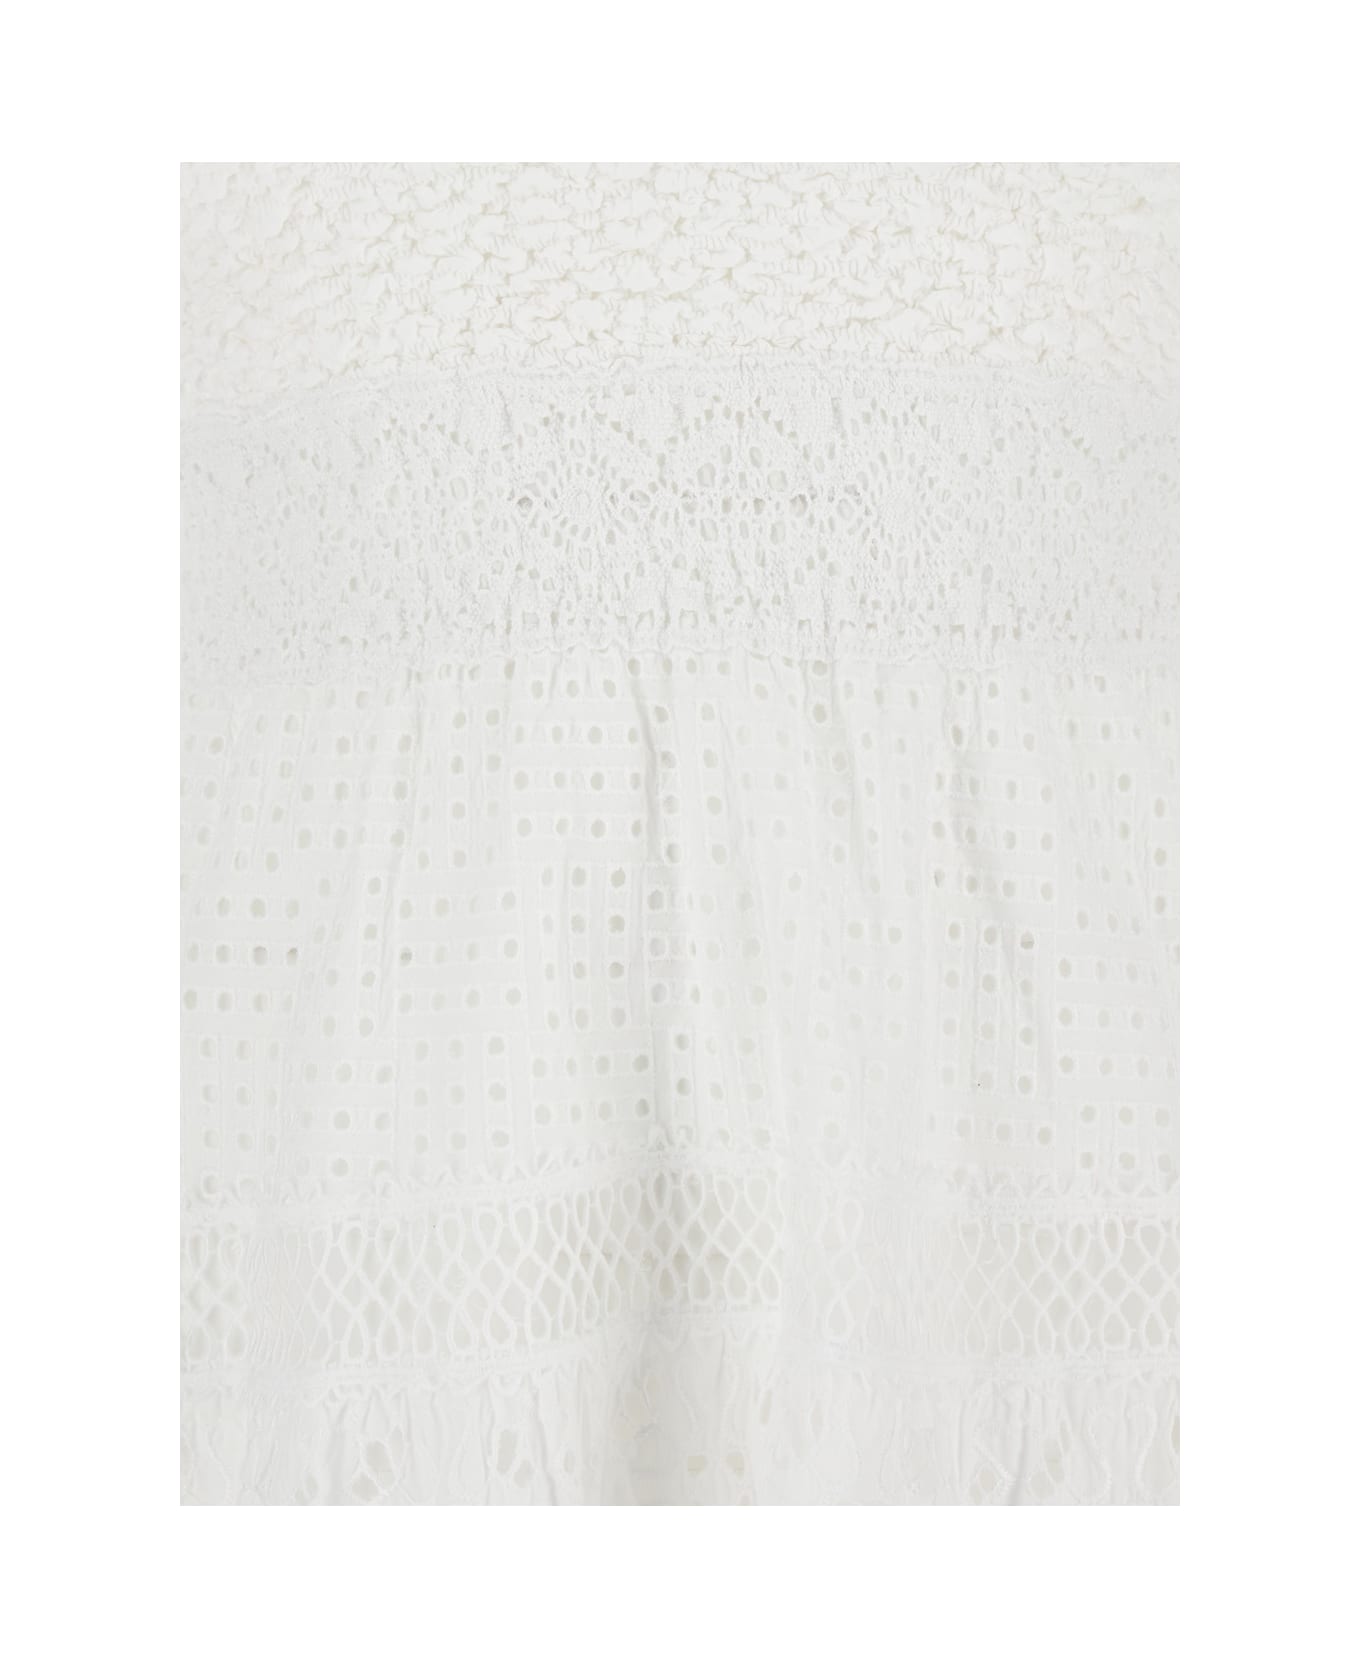 Temptation Positano White Short Embroidered Dress In Cotton Woman - White ワンピース＆ドレス